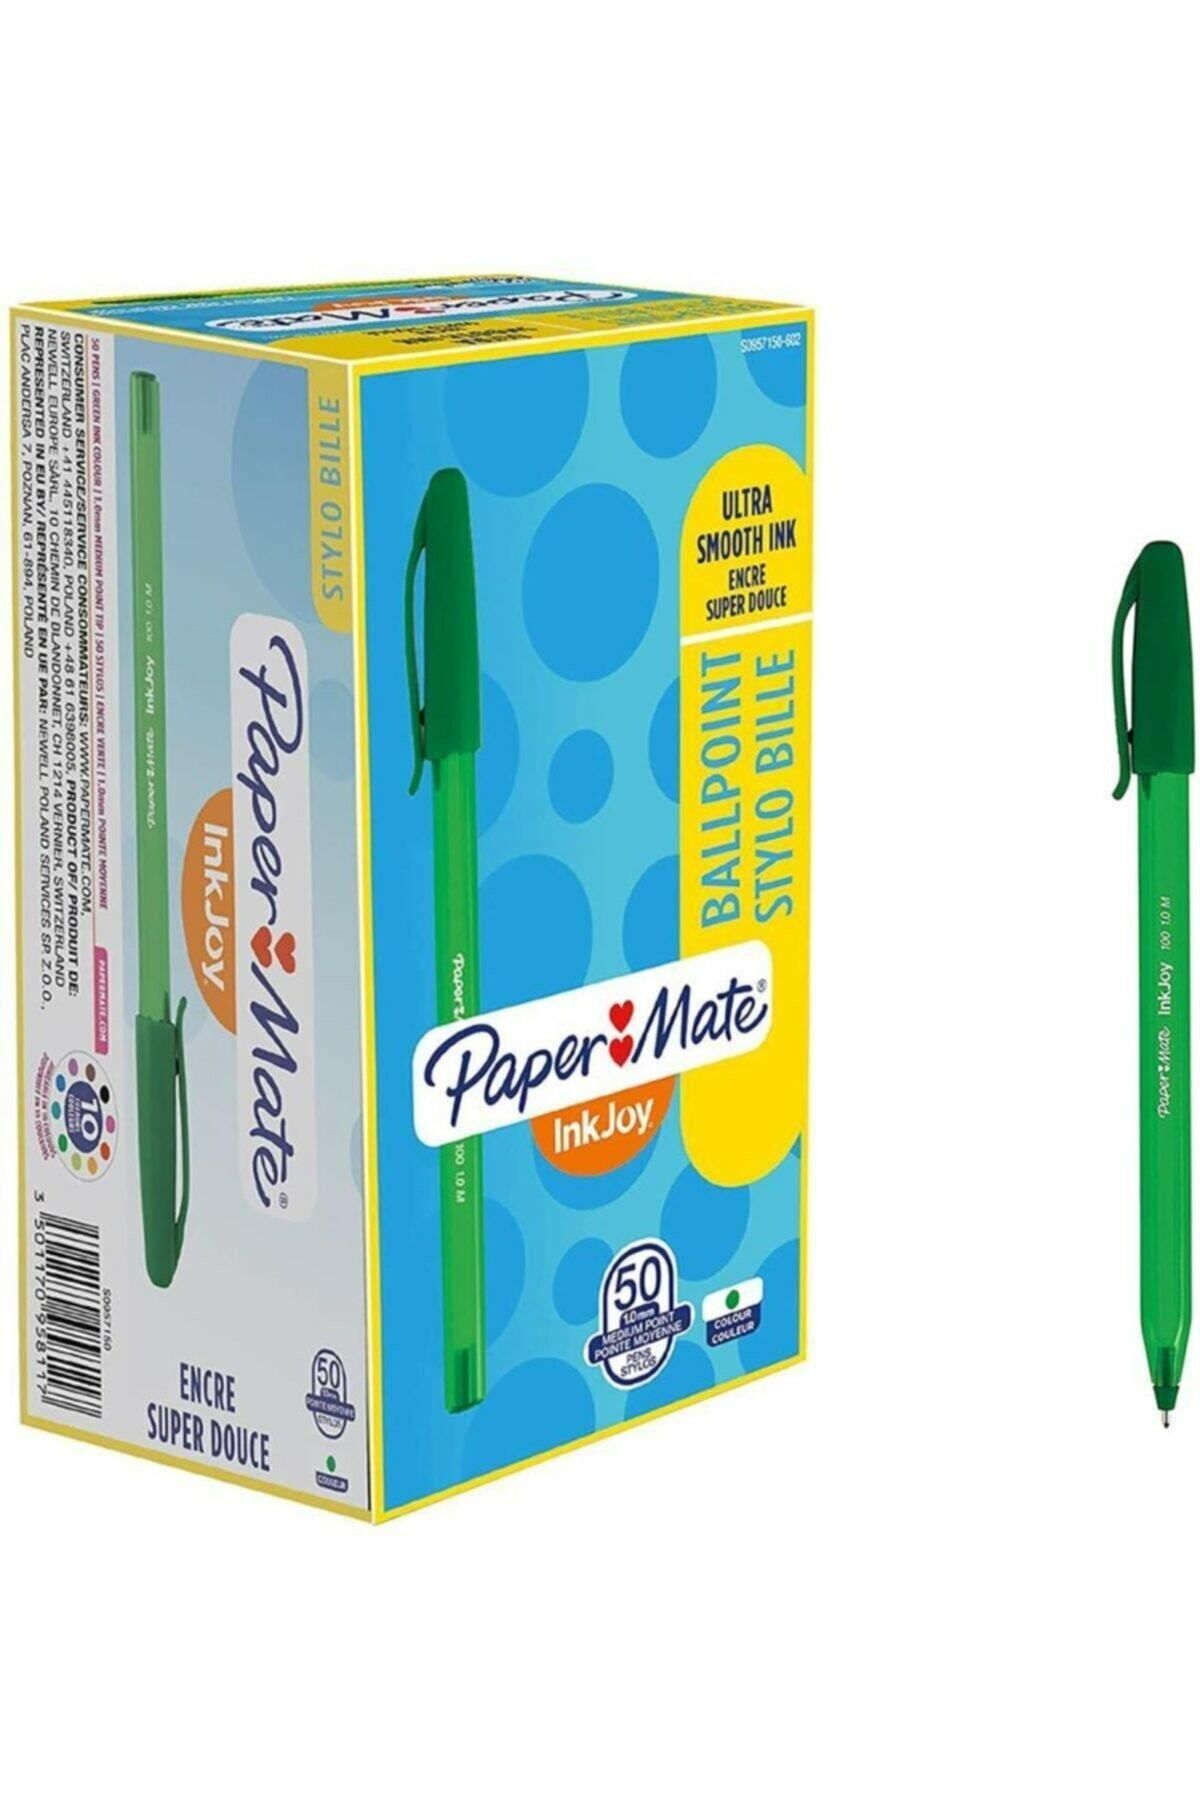 Paper Mate Paper Mate Kapaklı Tükenmez Kalem İnkjoy 100 1.0 MM Yeşil (50 Li Paket)